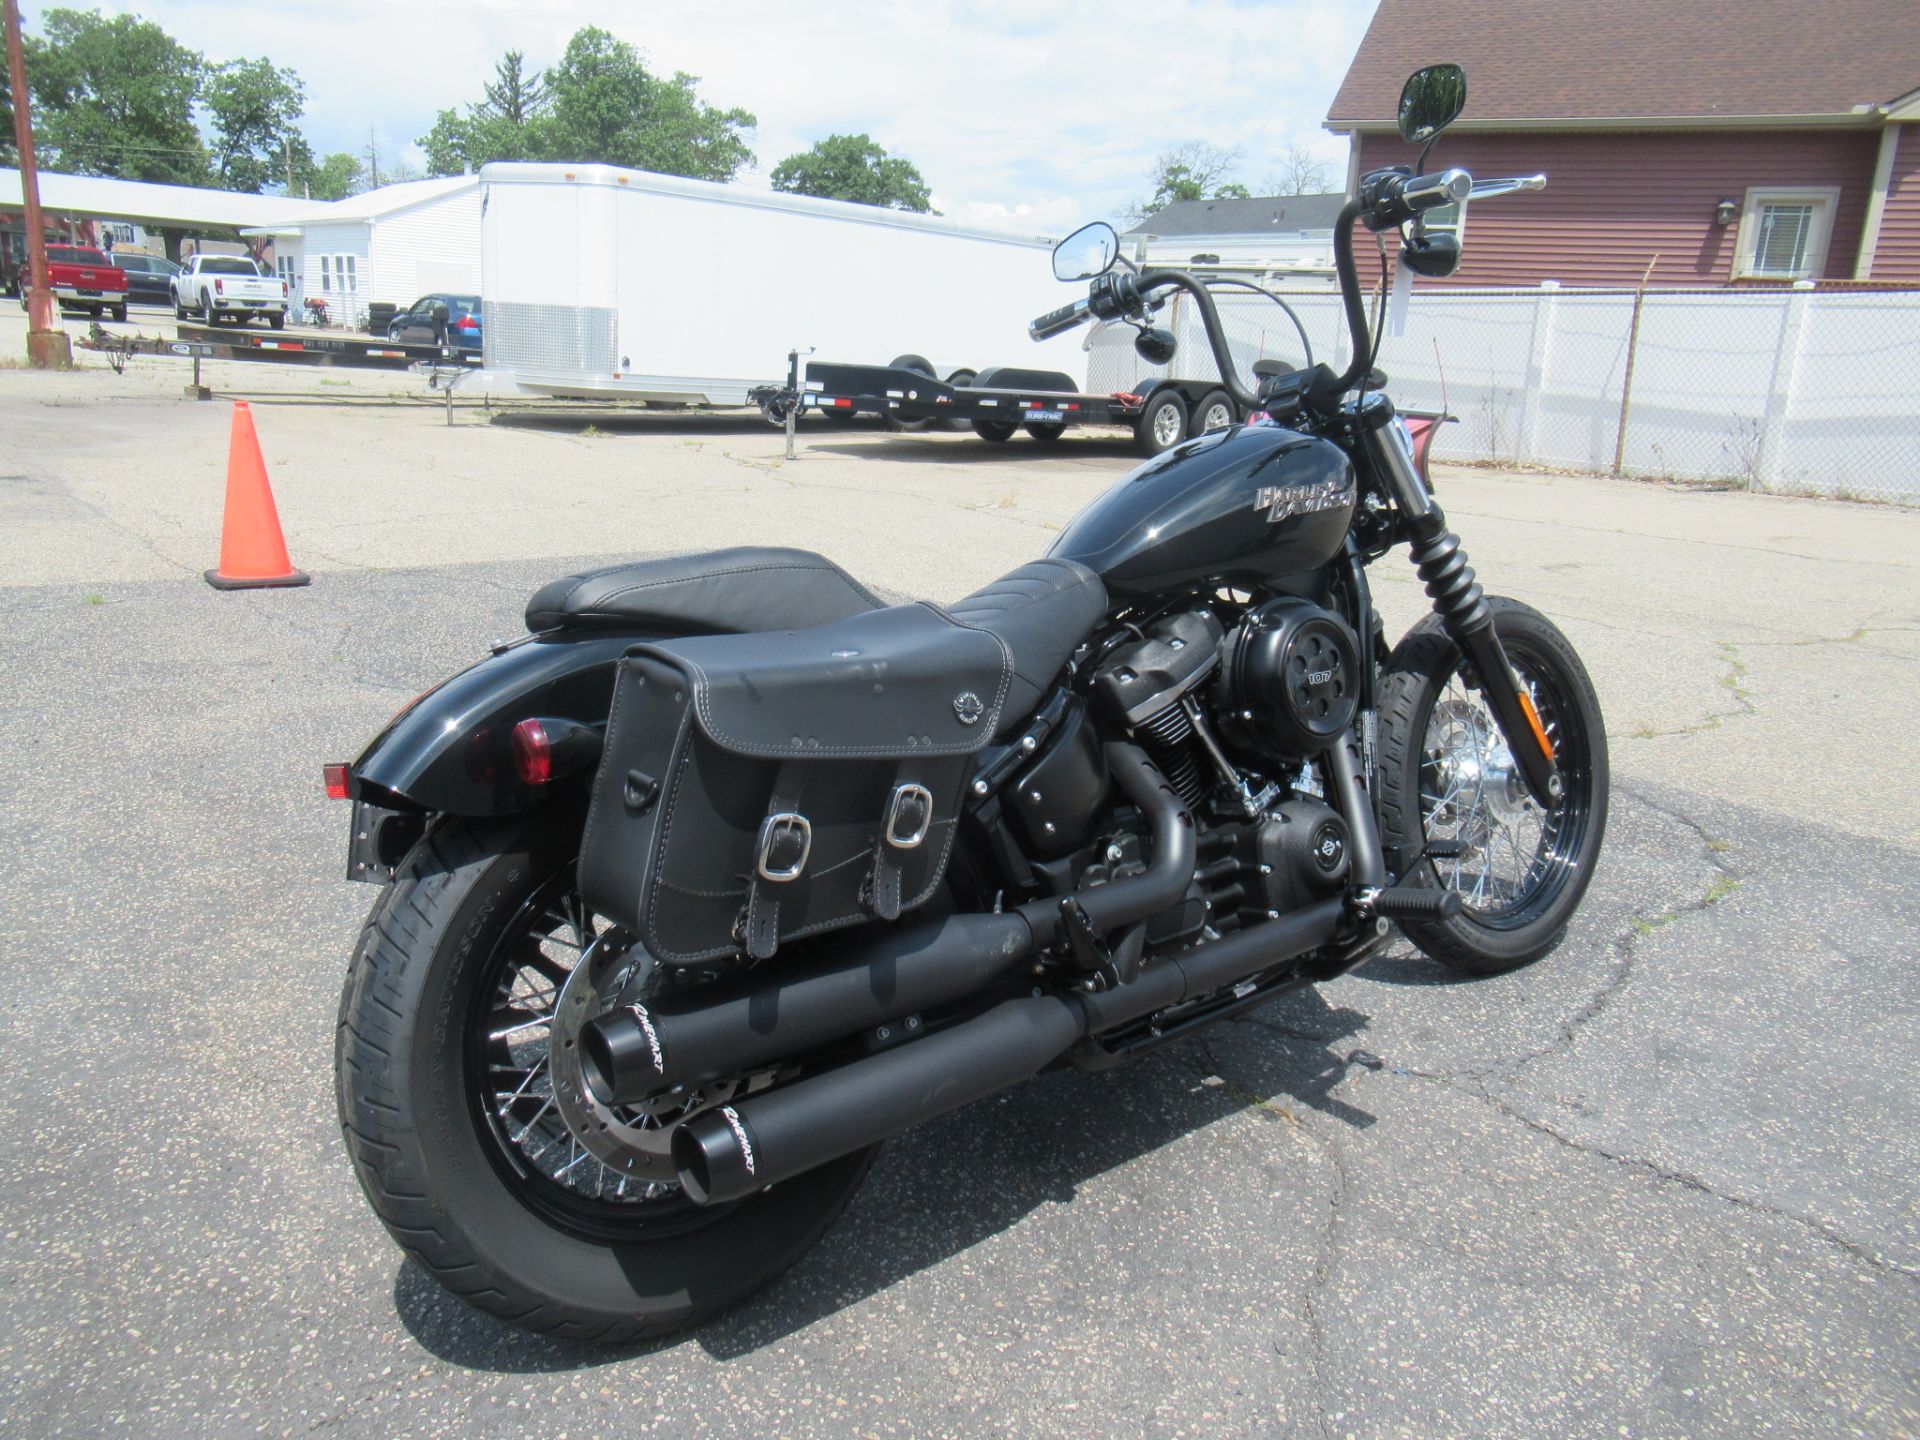 2019 Harley-Davidson Street Bob® in Springfield, Massachusetts - Photo 2